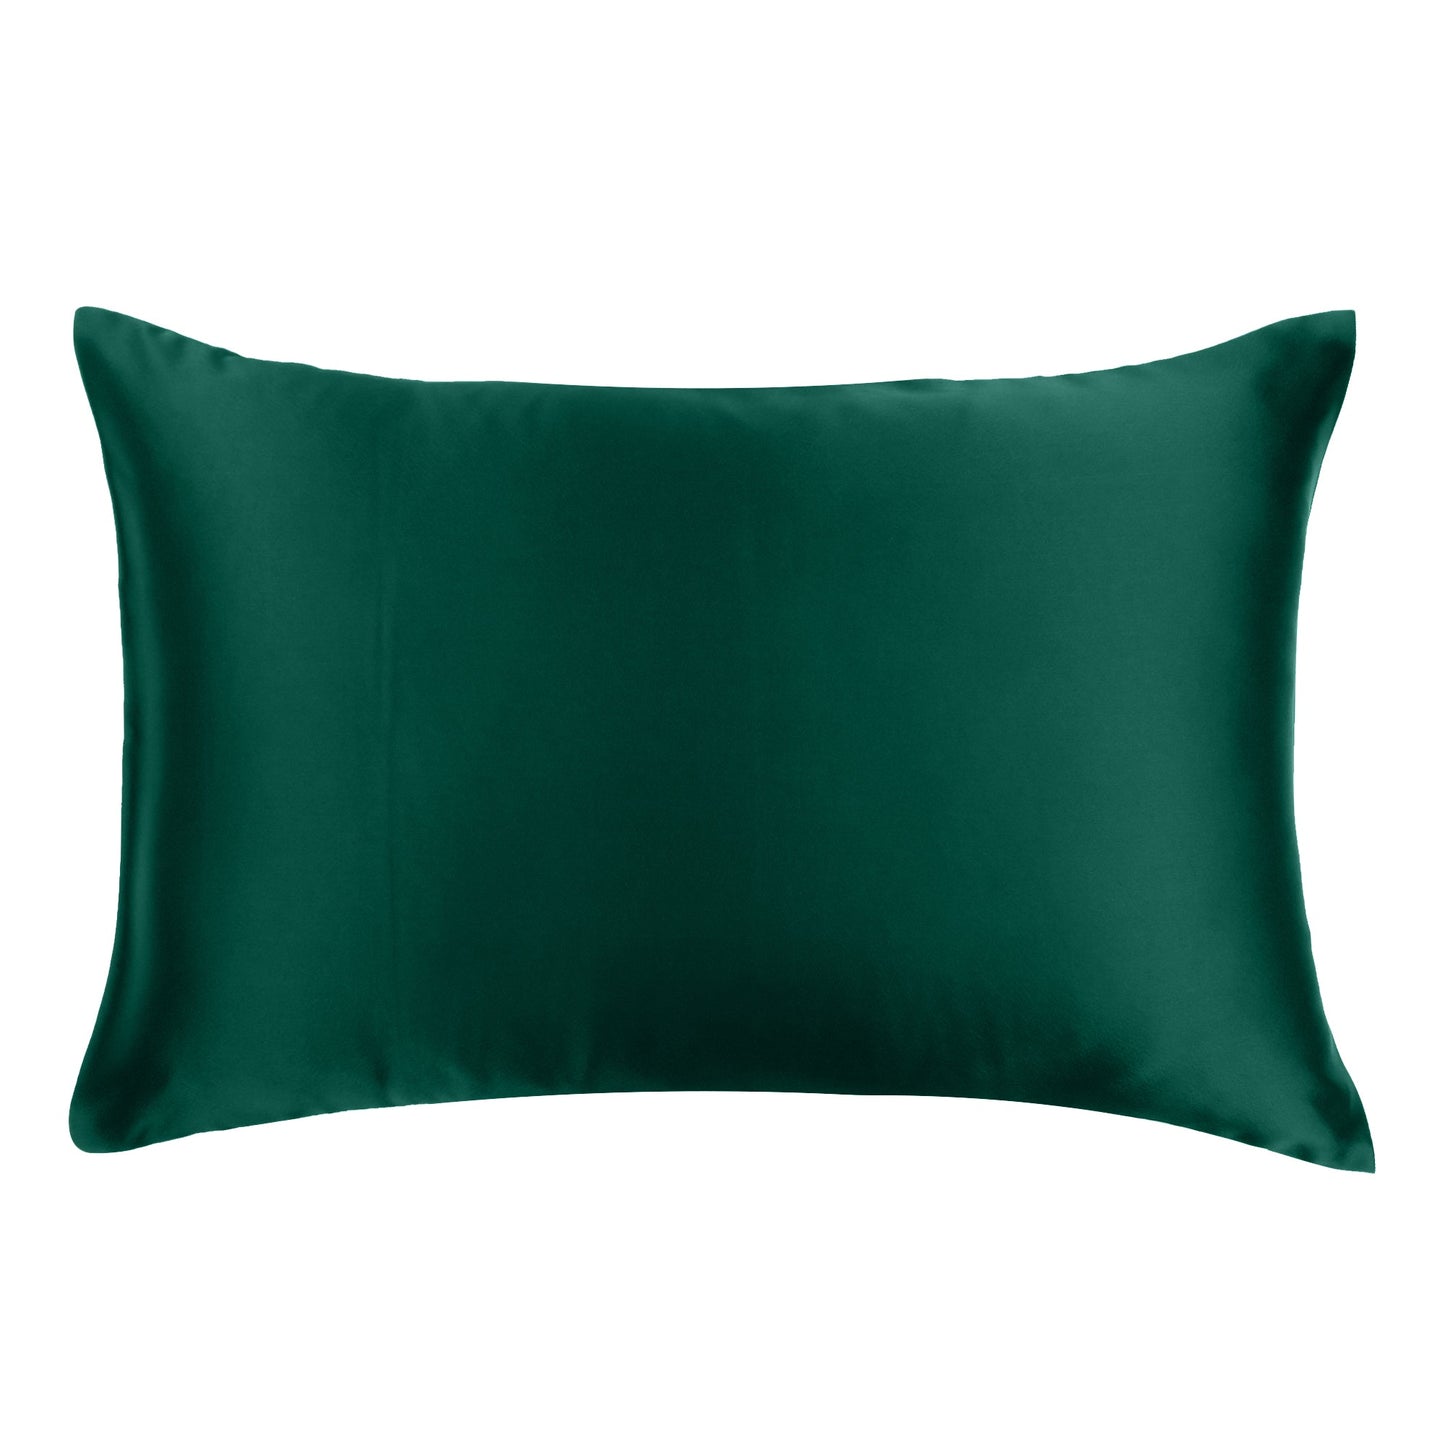 Luxury Soft Plain Satin Silk Pillowcases in Set of 2 - Ponderosa Pine